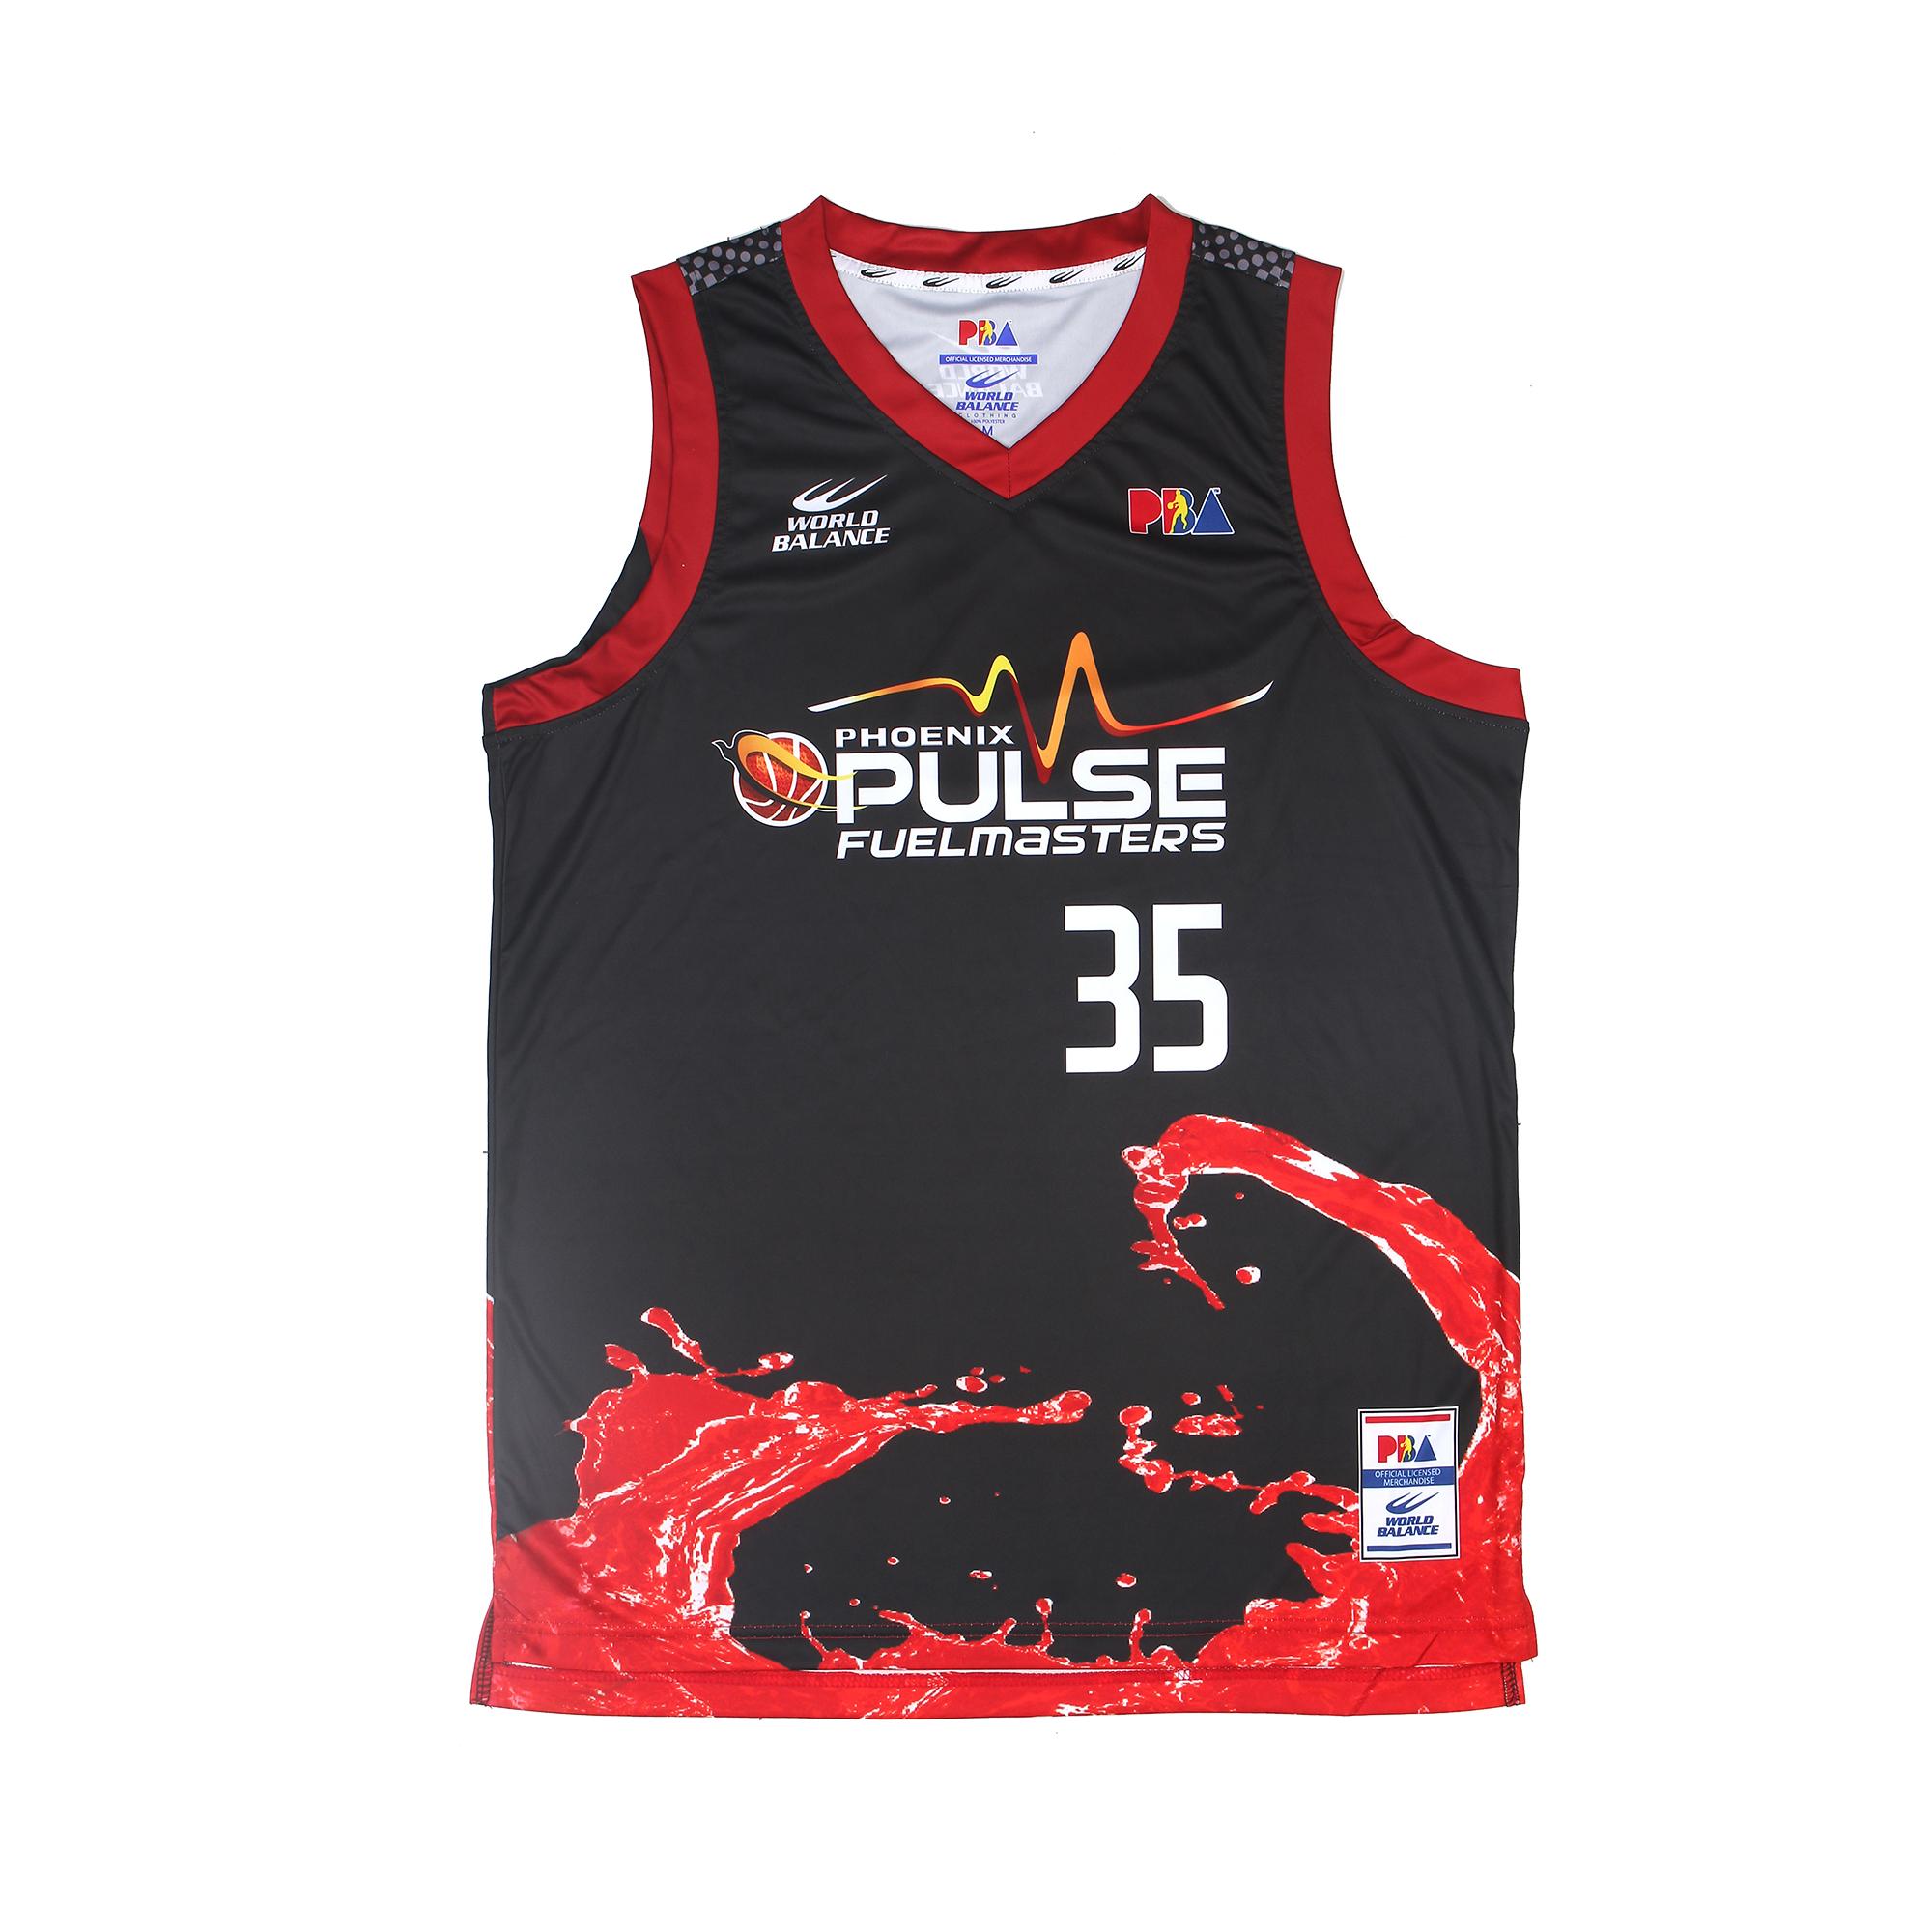 phoenix jersey design pba